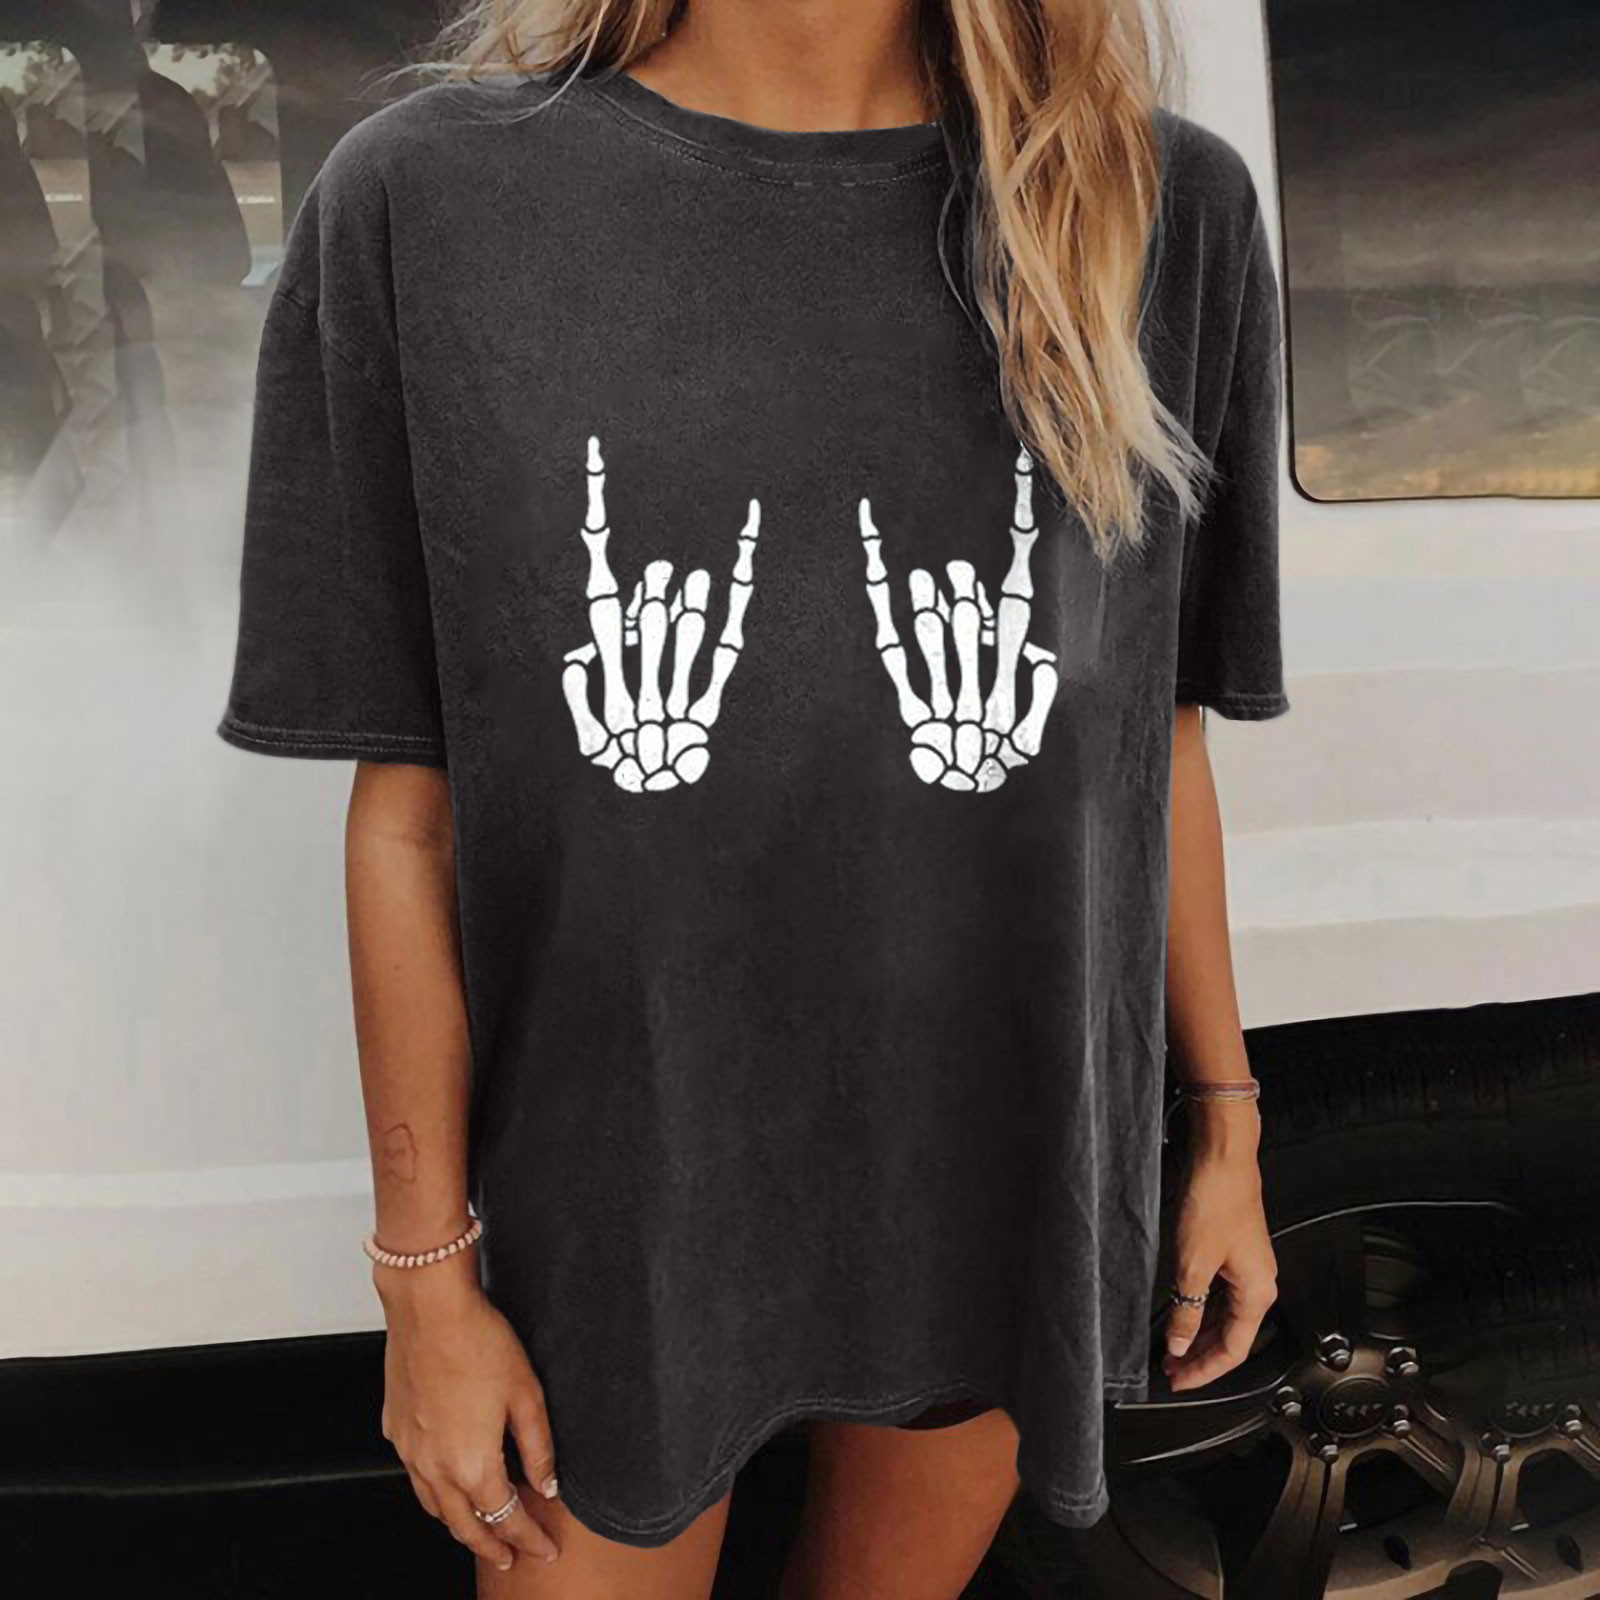 

Skull Print Crew Neck T-shirt, Casual Loose Short Sleeve Fashion Summer T-shirts Tops, Women's Clothing